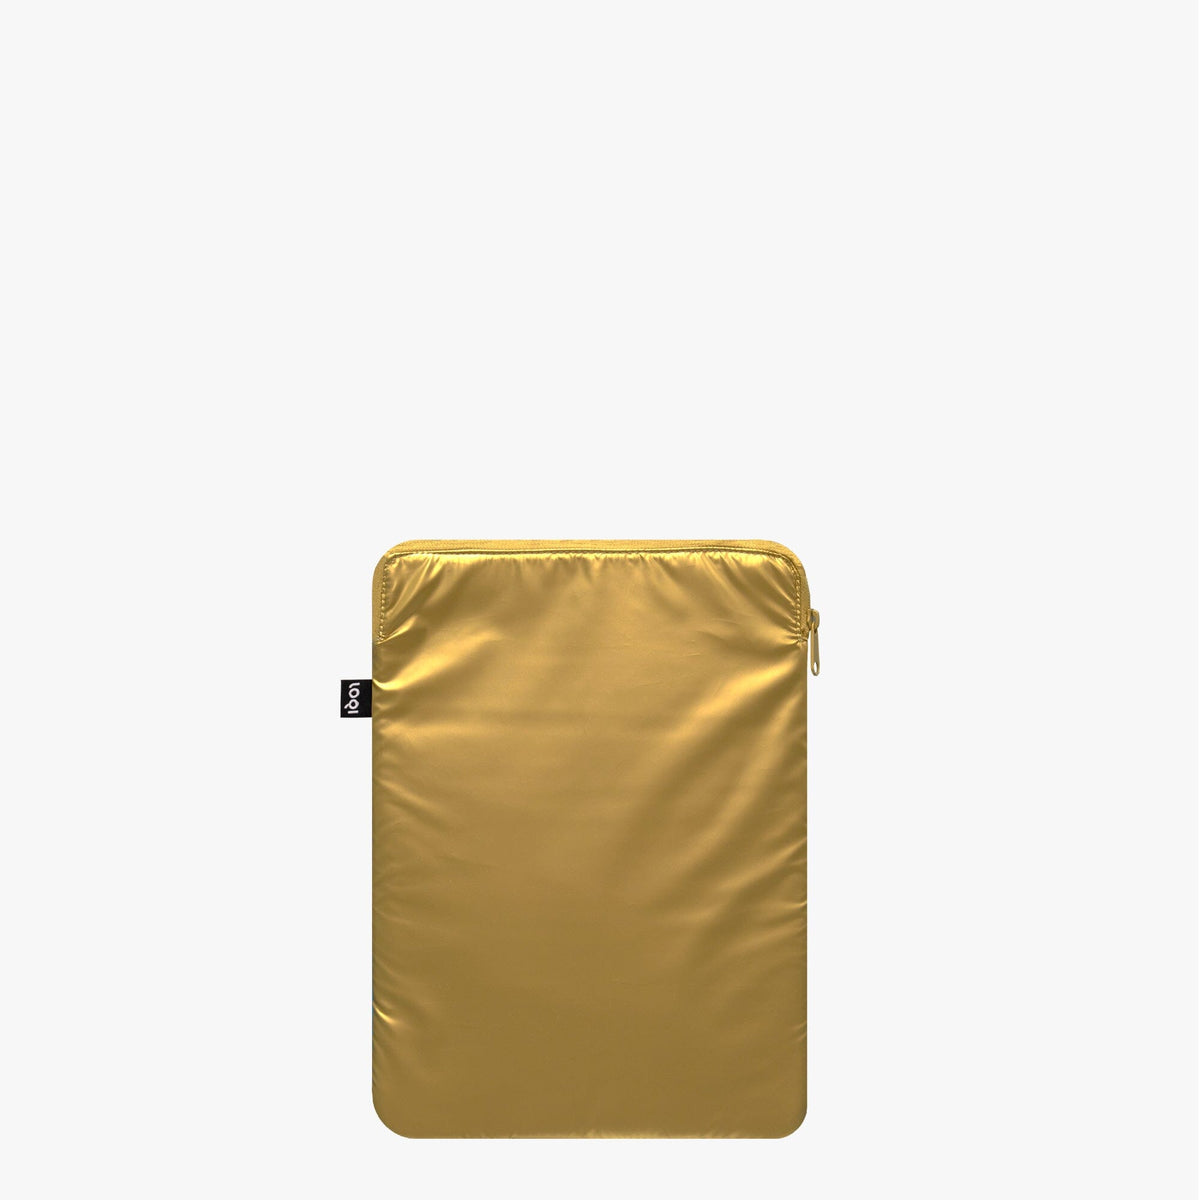 Gold Laptop Sleeve 24 x 33 cm